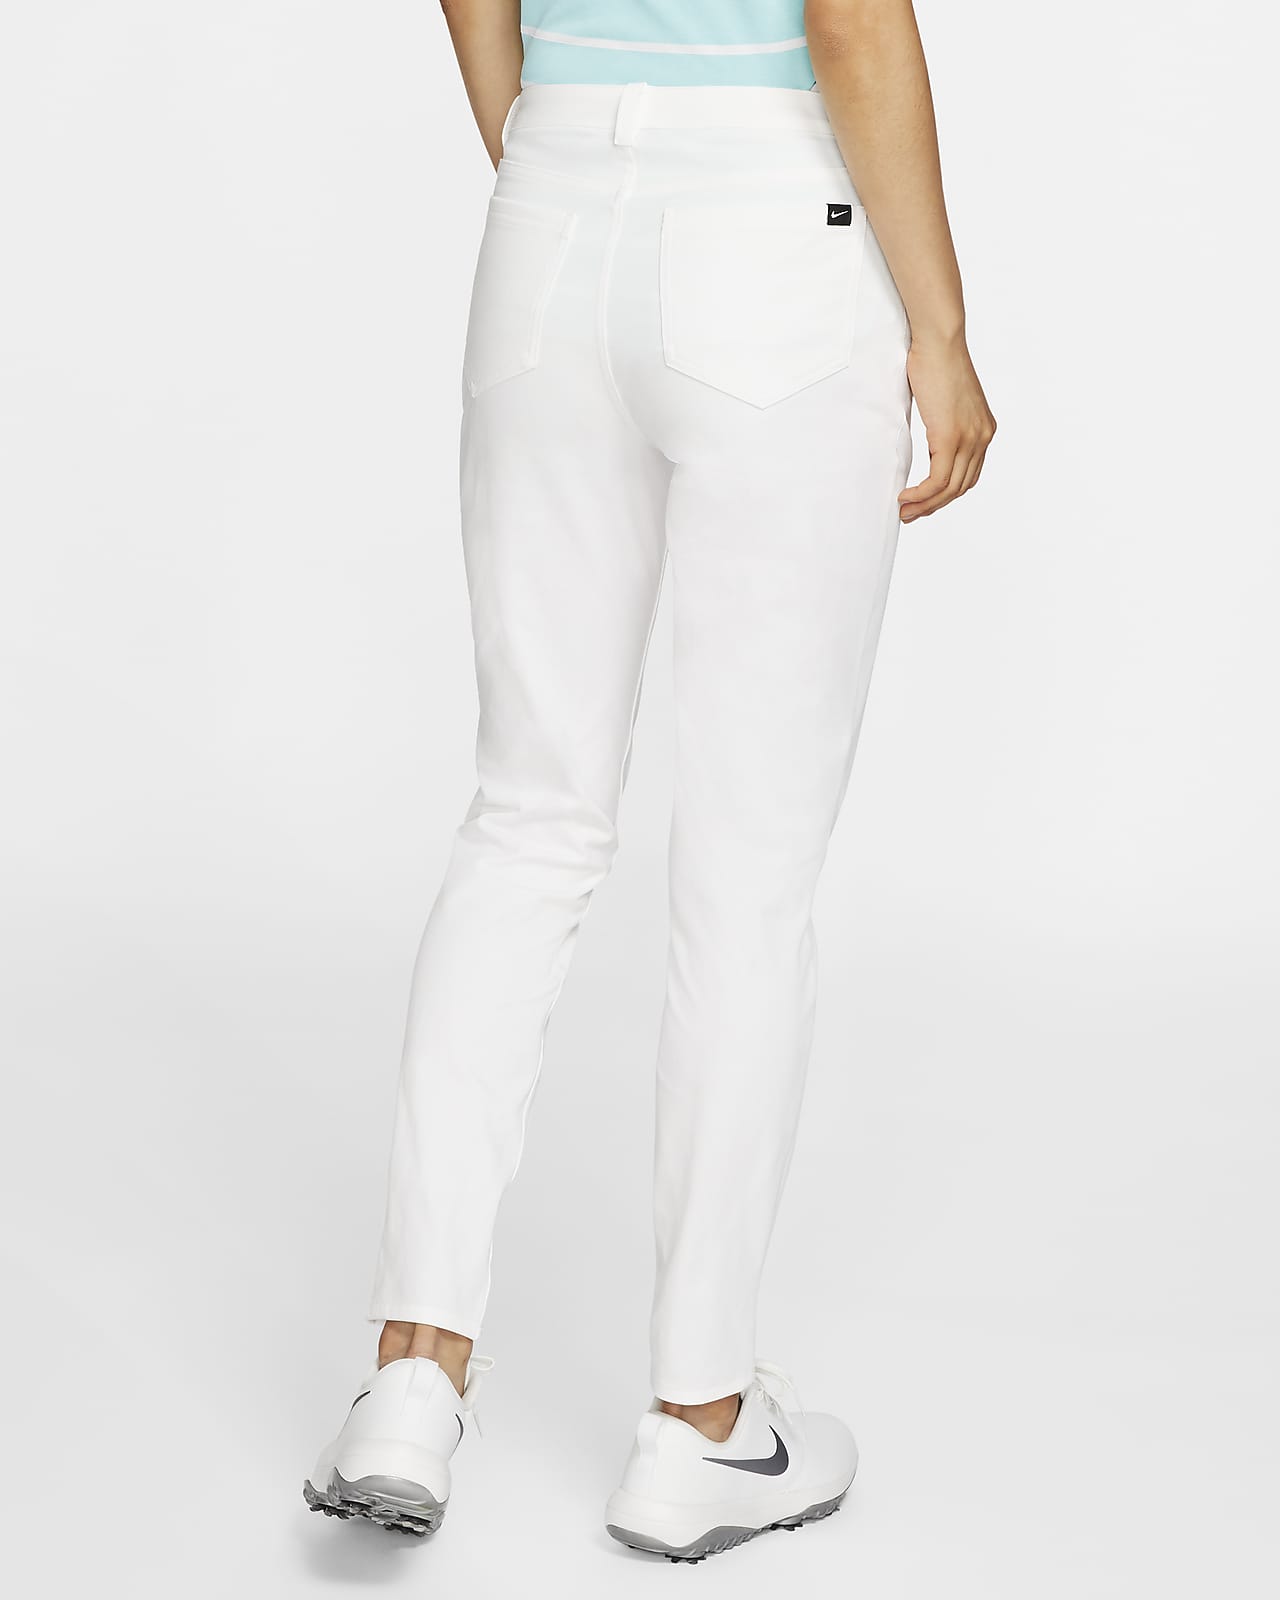 Nike Women's Dri-Fit Flex White Golf Pants Size 4 NWT New $90